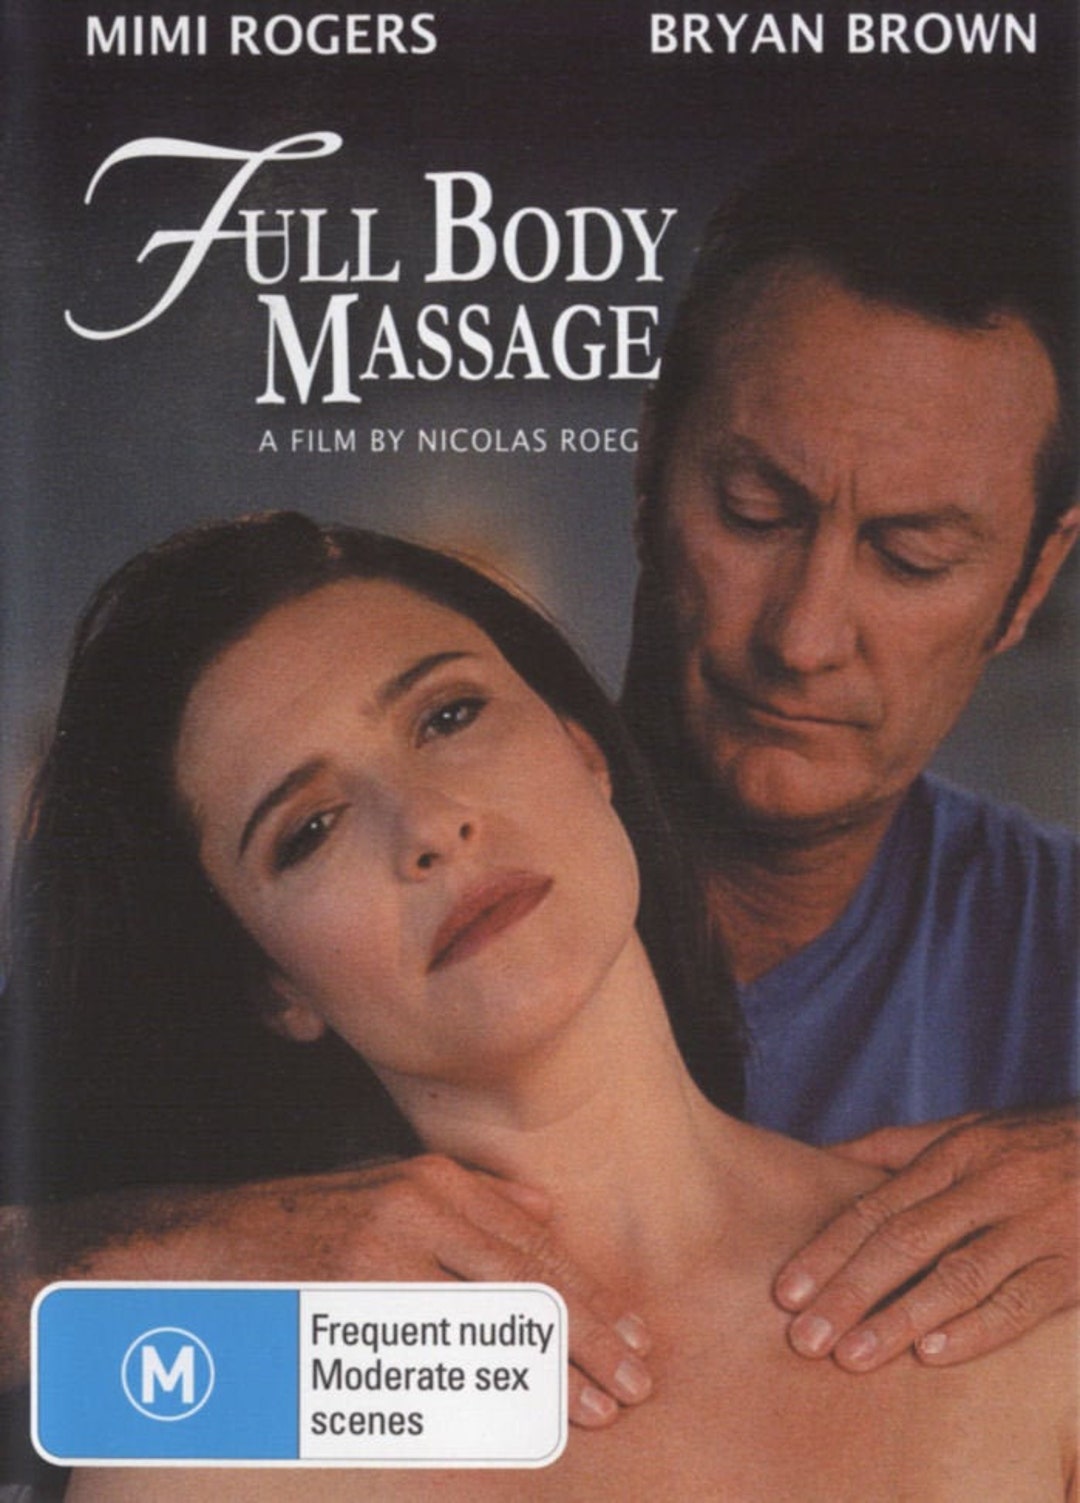 DVD Full Body Massage 1995 Mimi Rogers Bryan Brown Nicolas